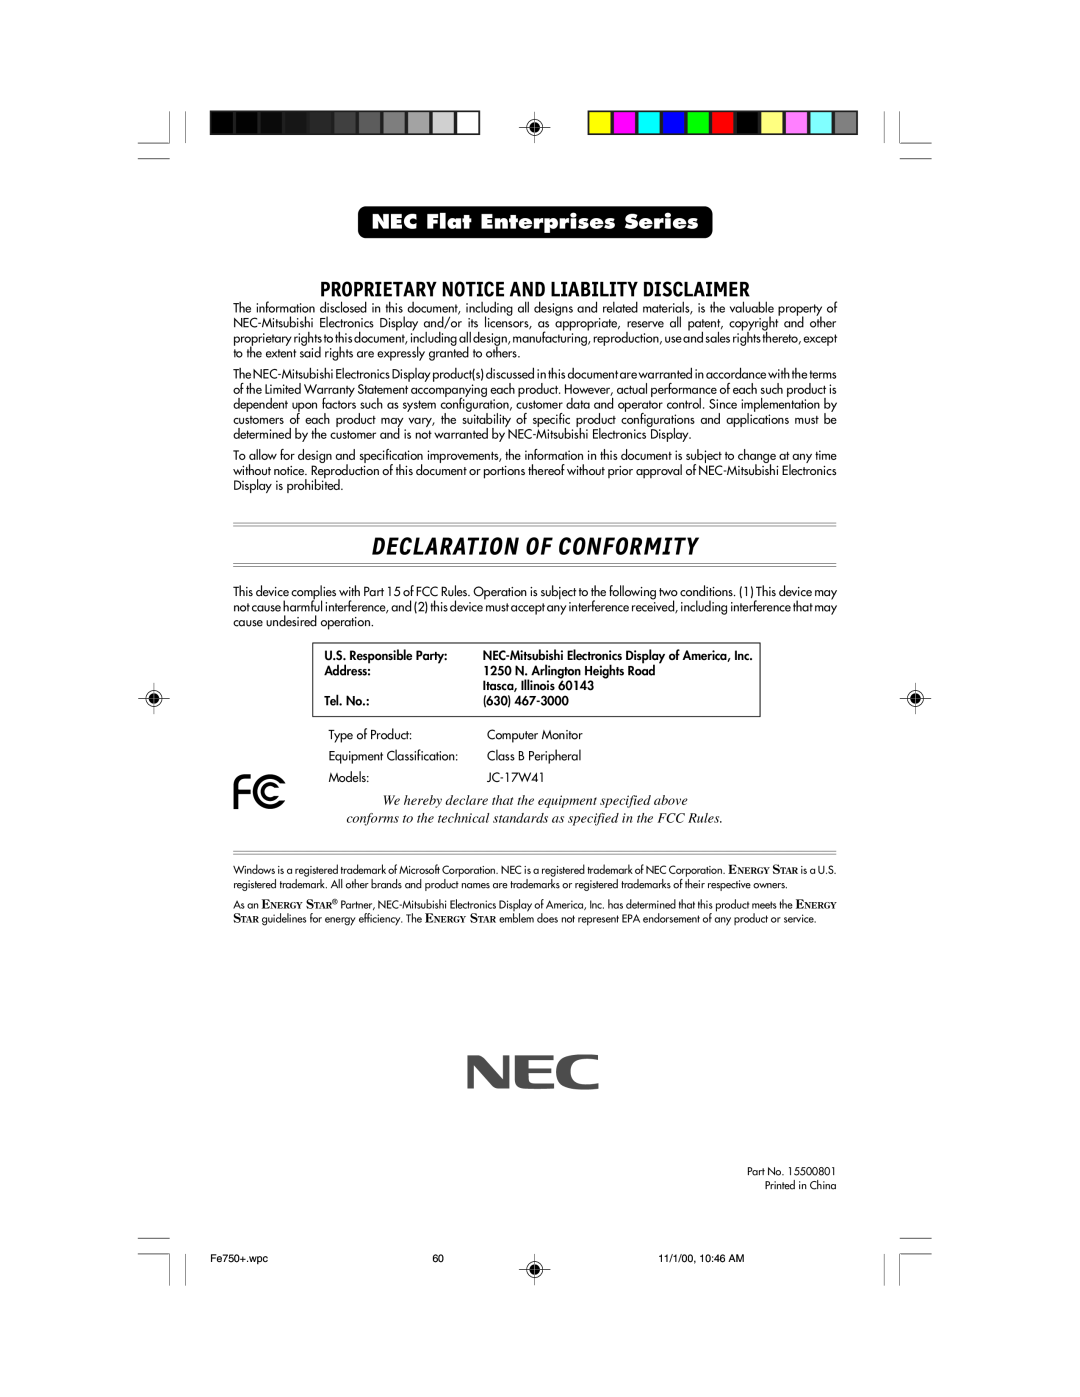 NEC FE750 Plus Declaration Of Conformity, Proprietary Notice And Liability Disclaimer, NEC Flat Enterprises Series 